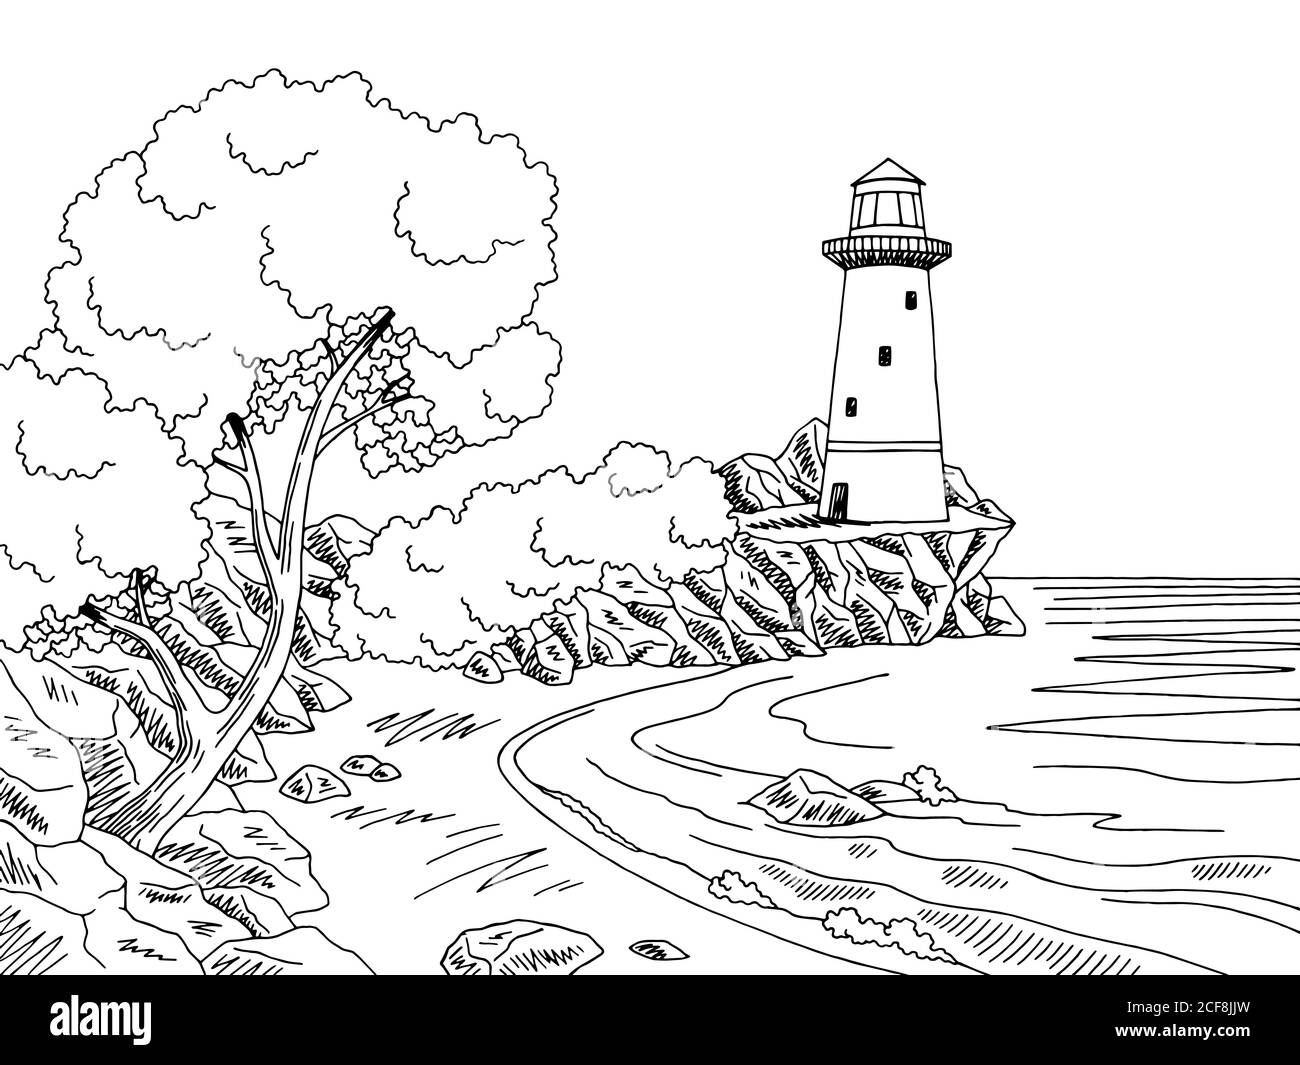 Leuchtturm Meer Küste Grafik schwarz weiß Landschaft Skizze Illustration Vektor Stock Vektor